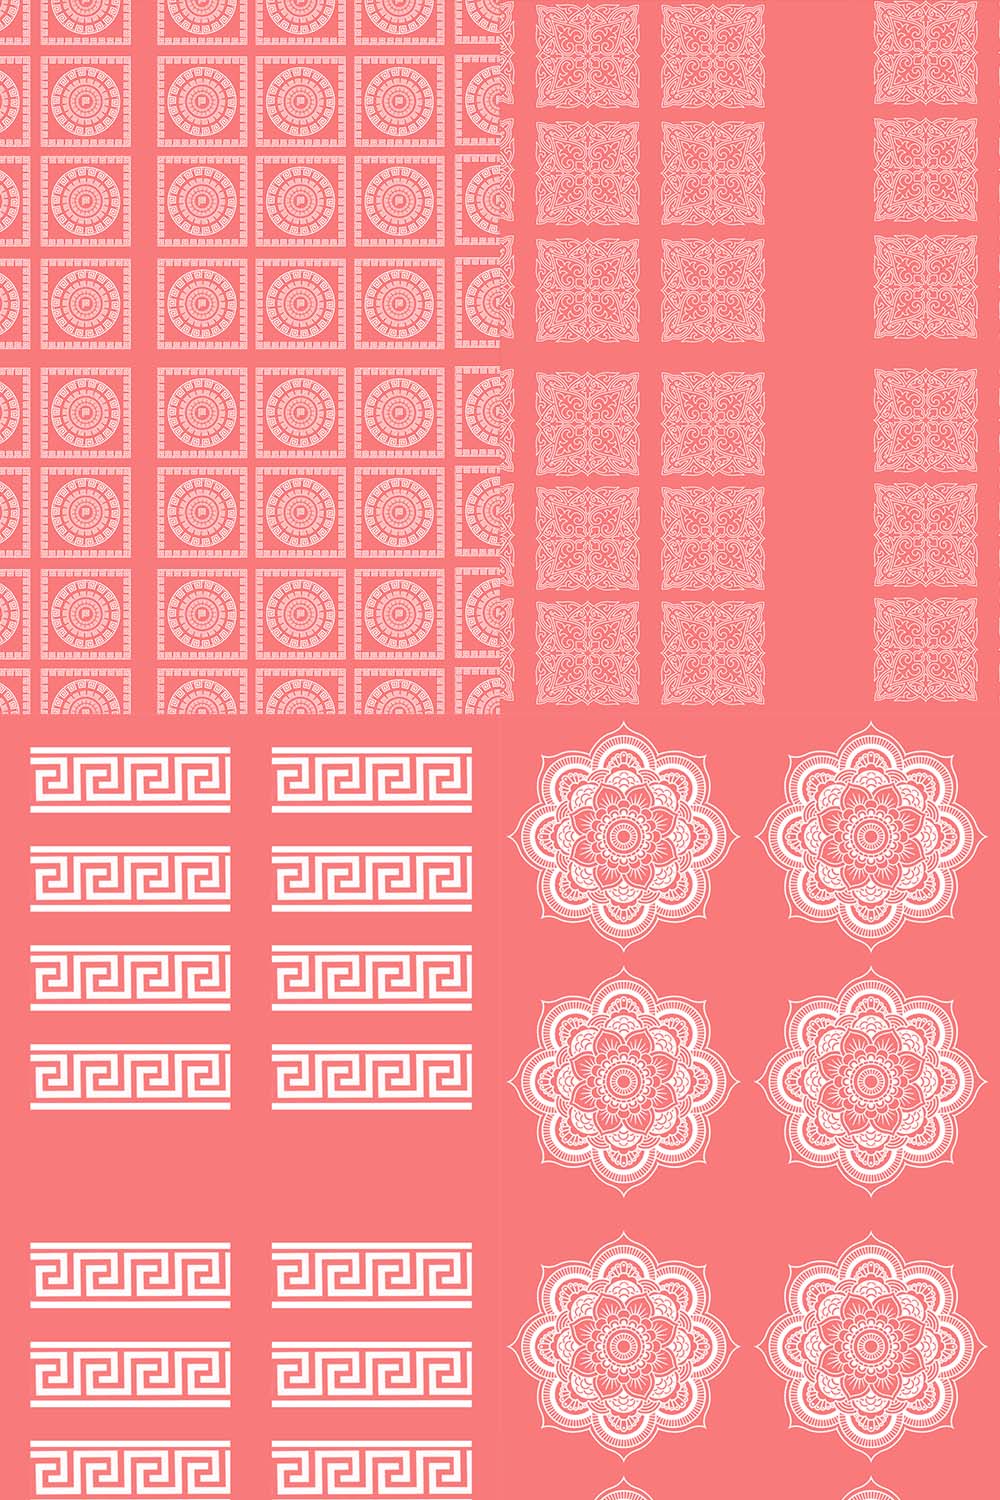 Room Design pattern pinterest preview image.